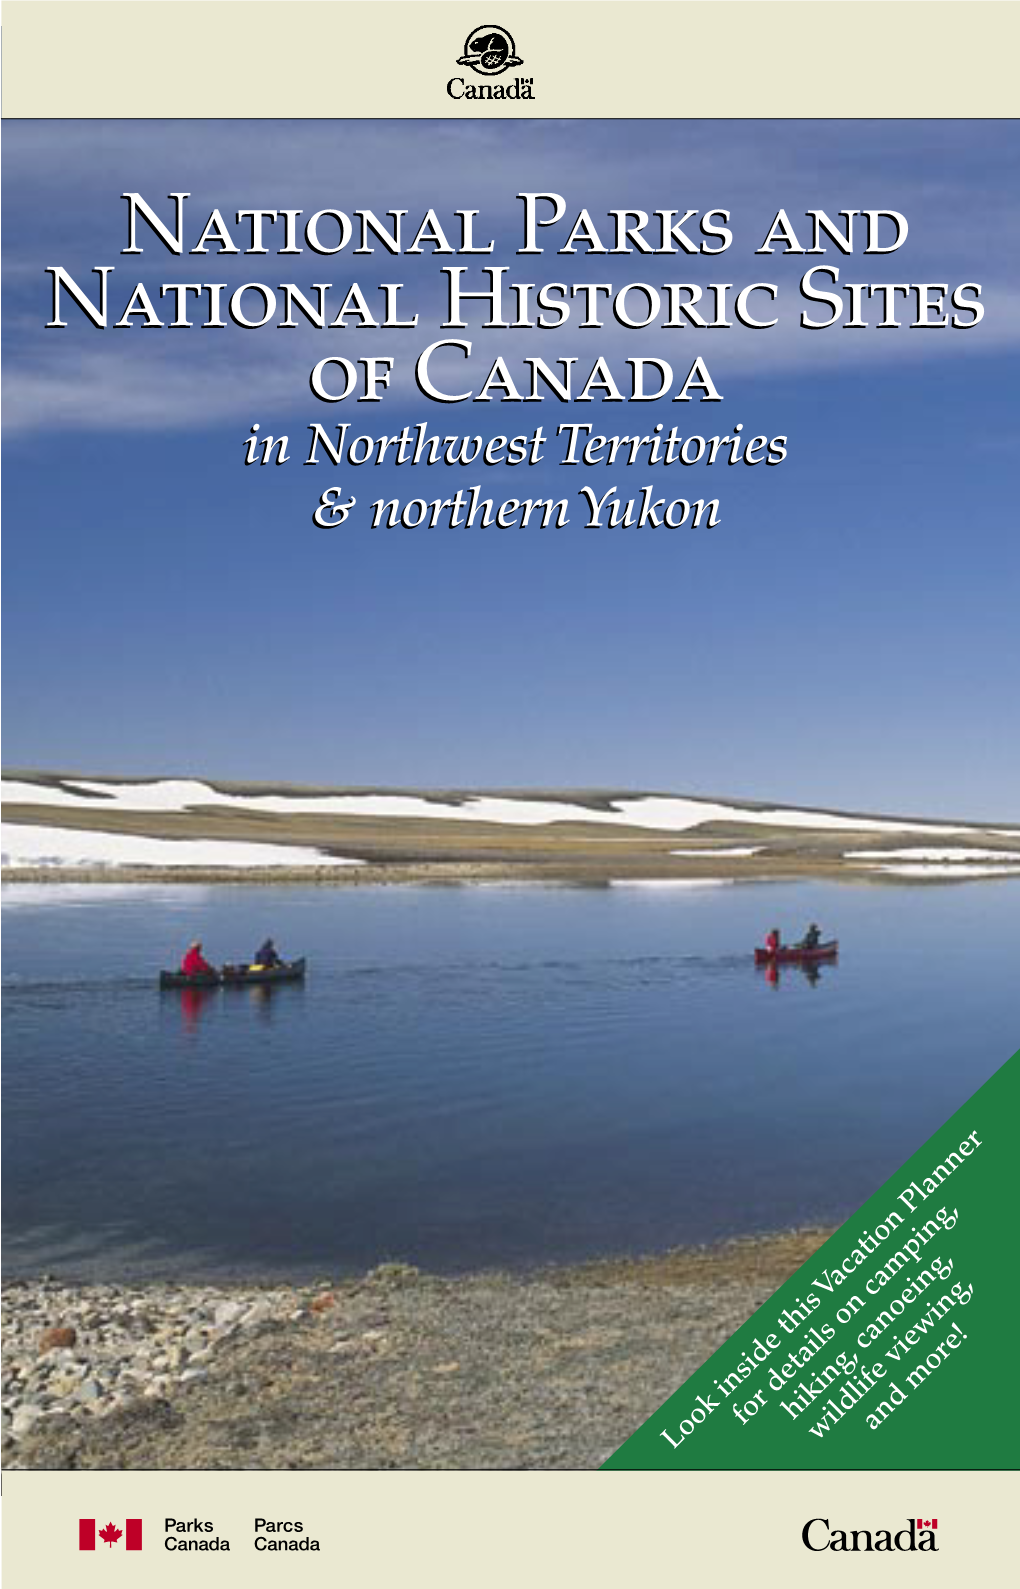 In Northwest Territories & Northern Yukon